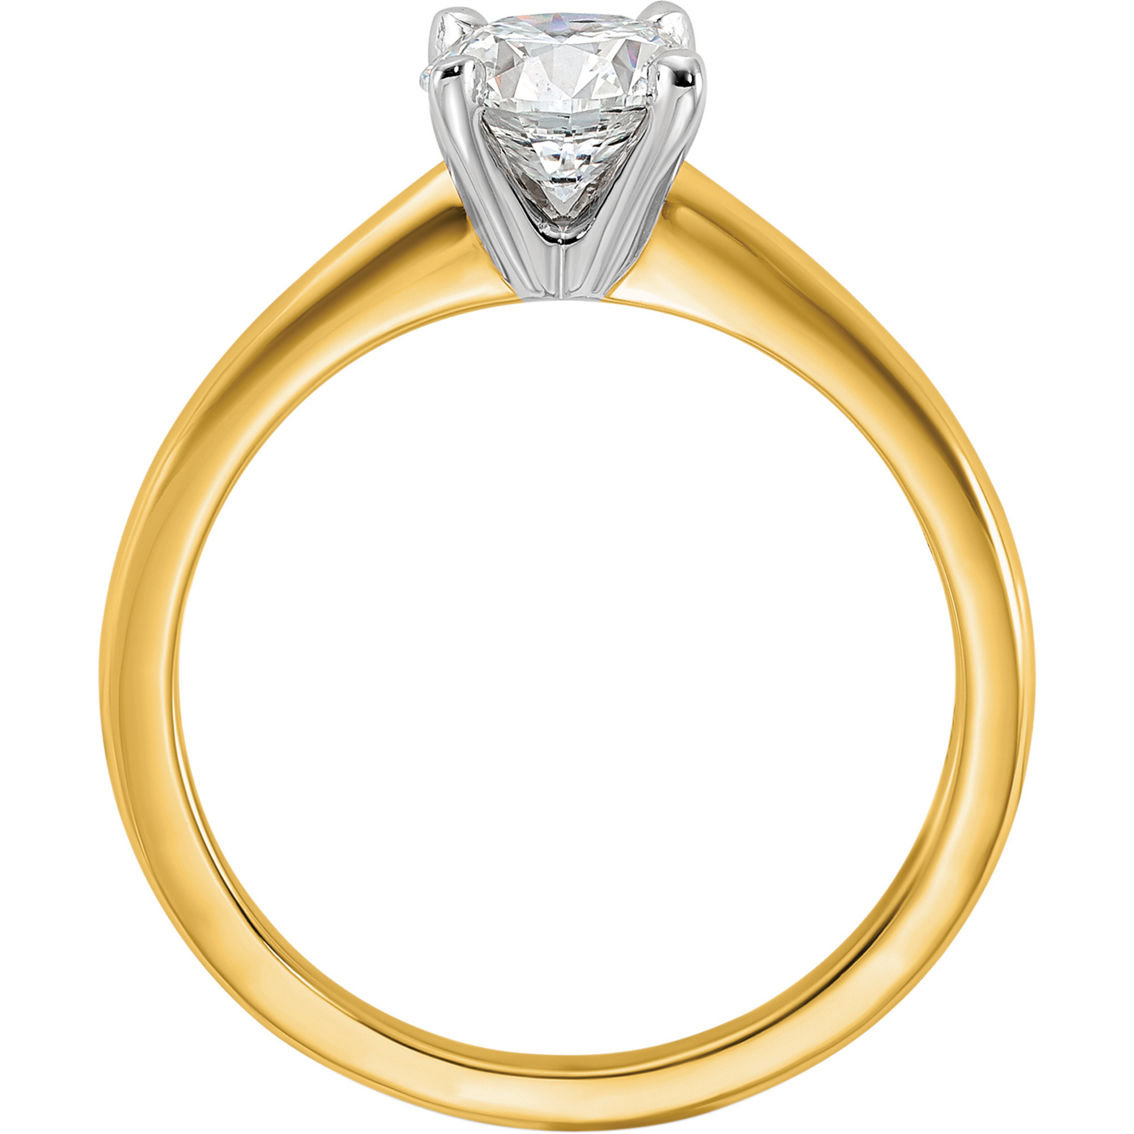 True Origin 14K Gold 1 1/2 ct. Certified Round Lab Grown Diamond Solitaire Ring - Image 3 of 4